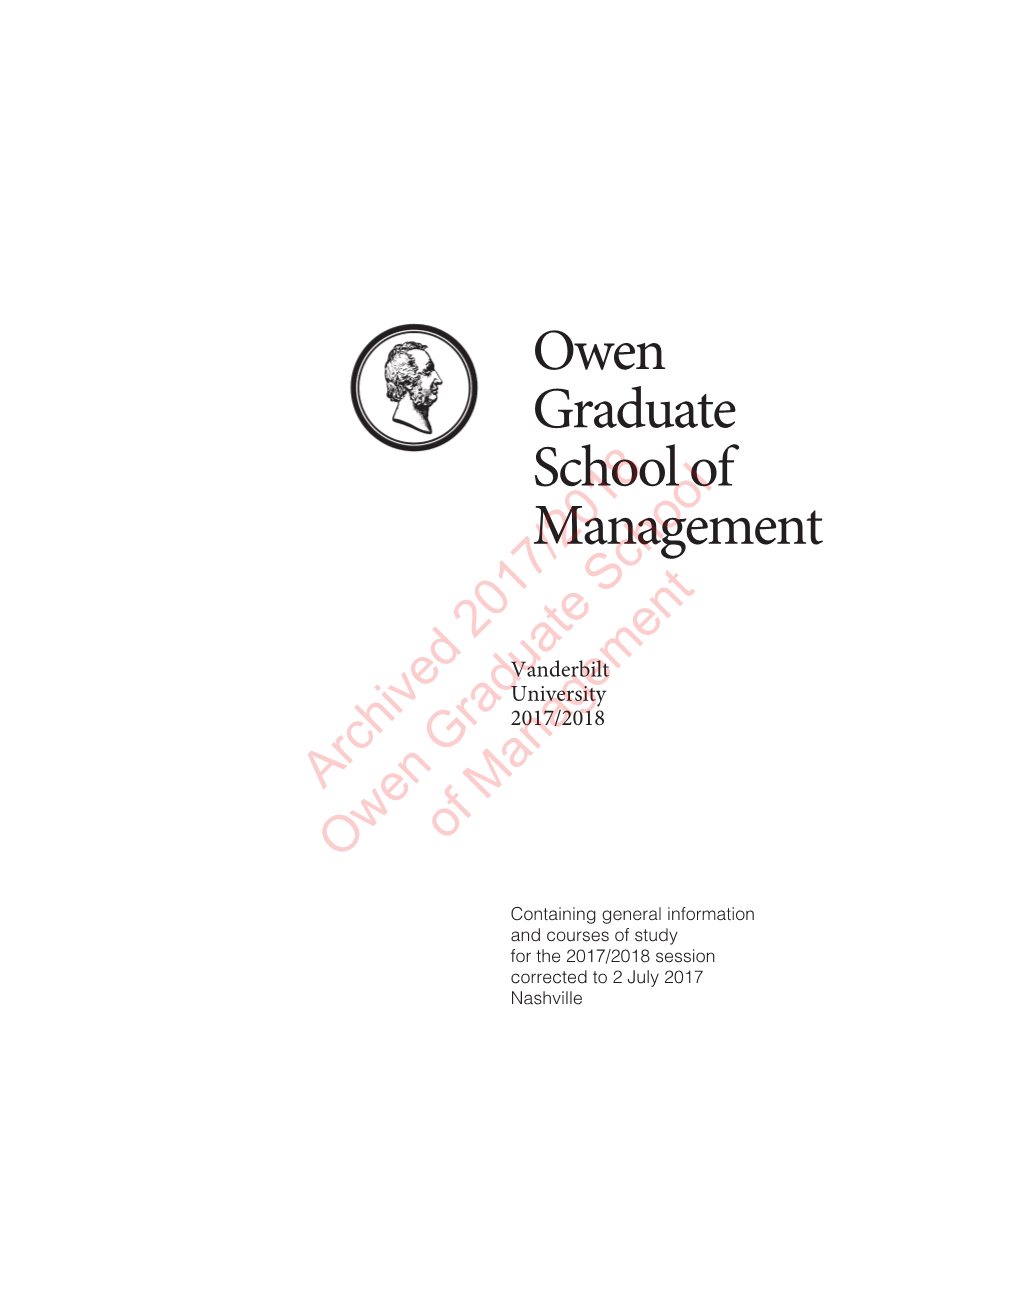 Owen Graduate School of Management